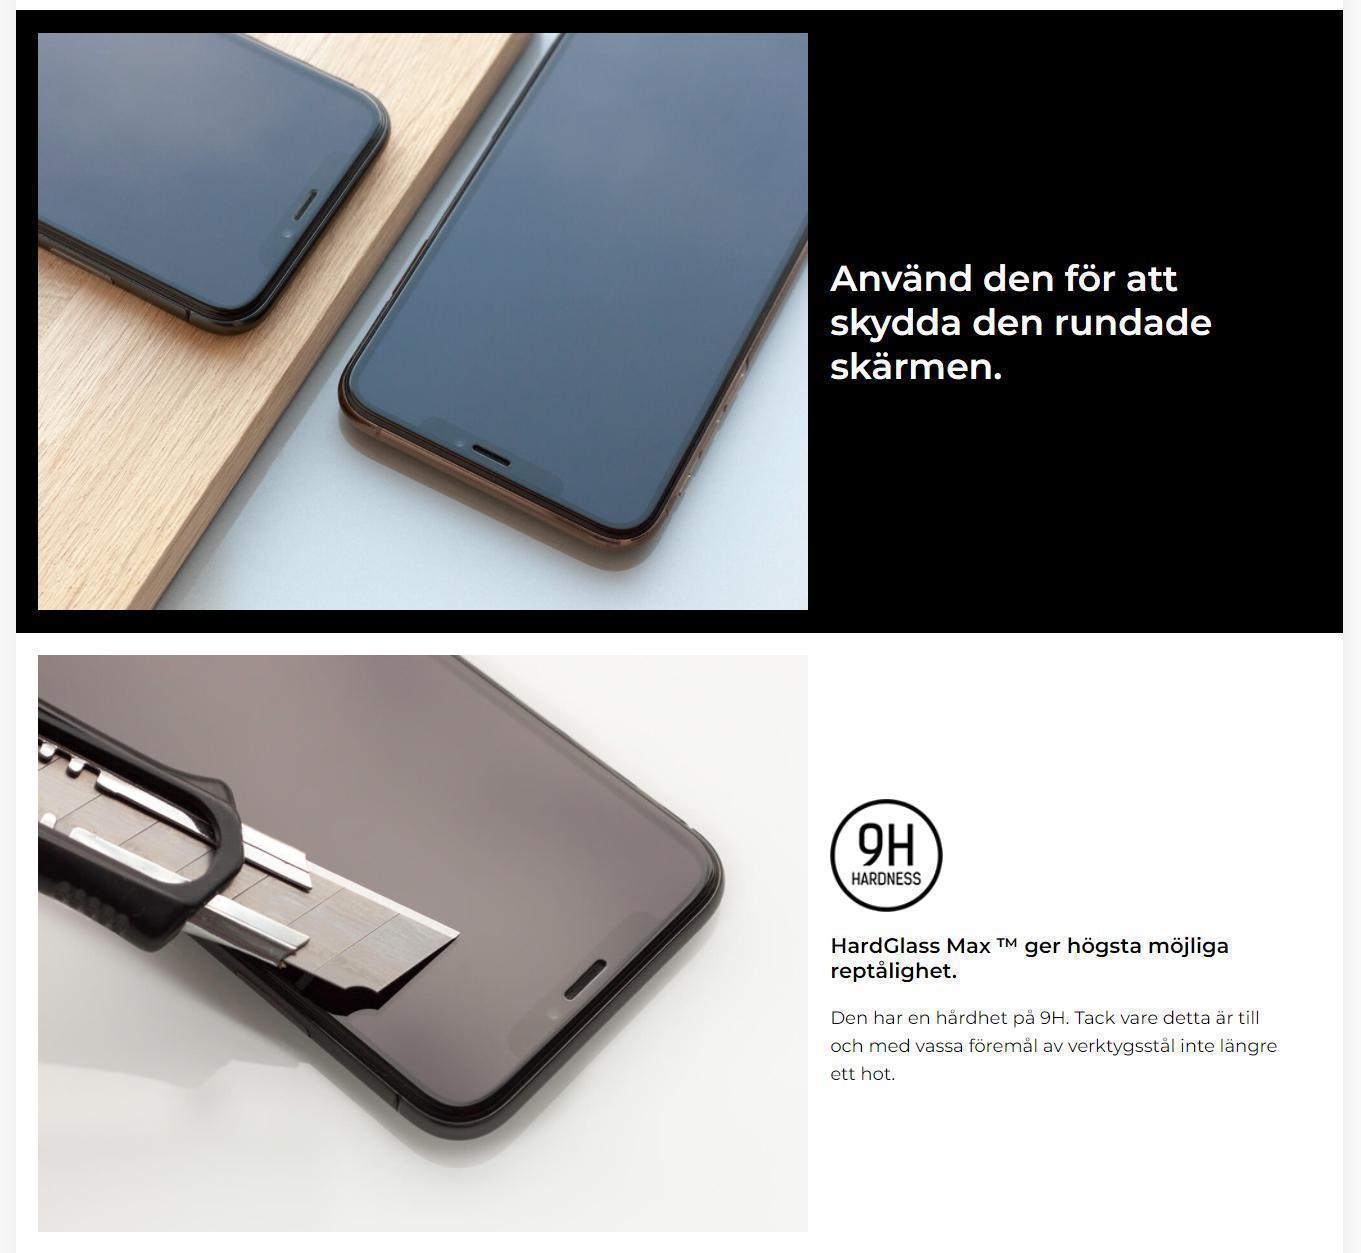 3MK iPhone 6s/6 Plus Skärmskydd FlexibleGlass Max - Sunnerbergteknik